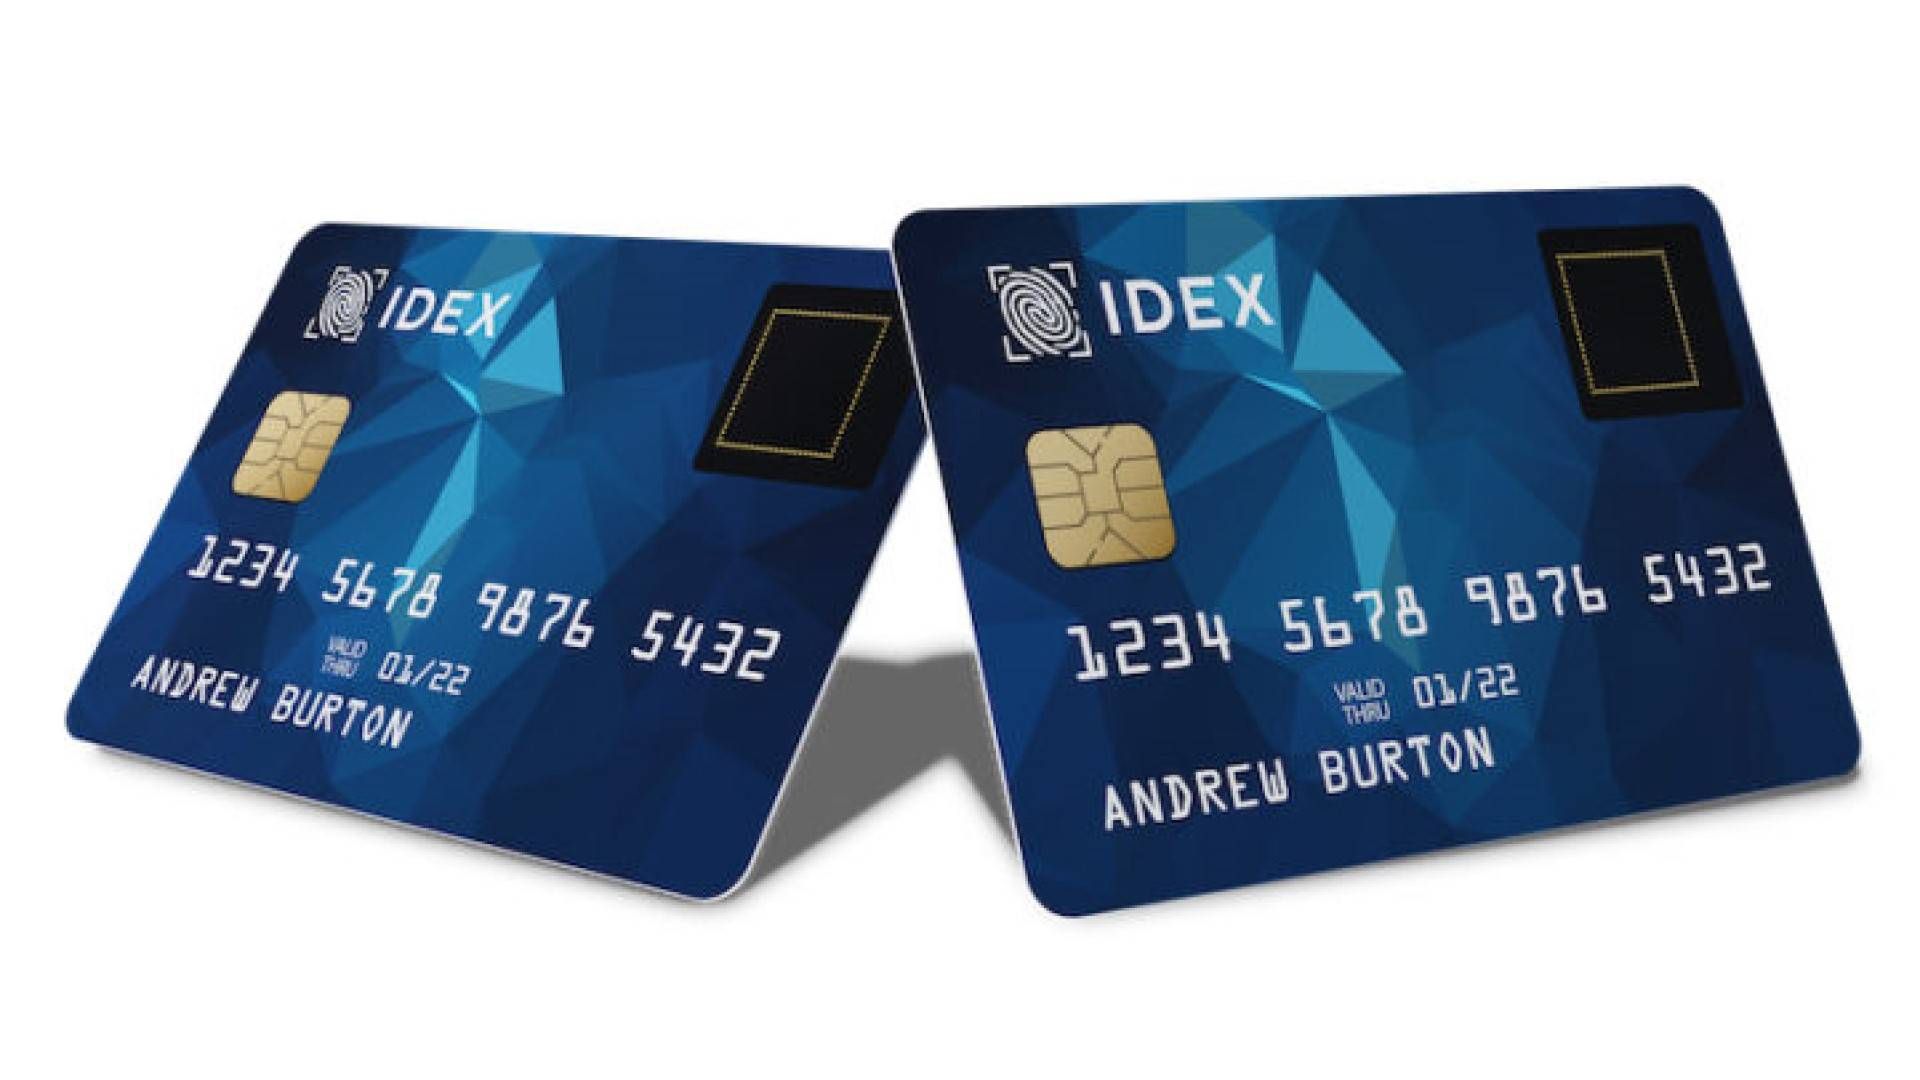 IDEX Biometrics oppnår CUP-sertifisering sammen med partneren Goldpac. | Foto: IDEX